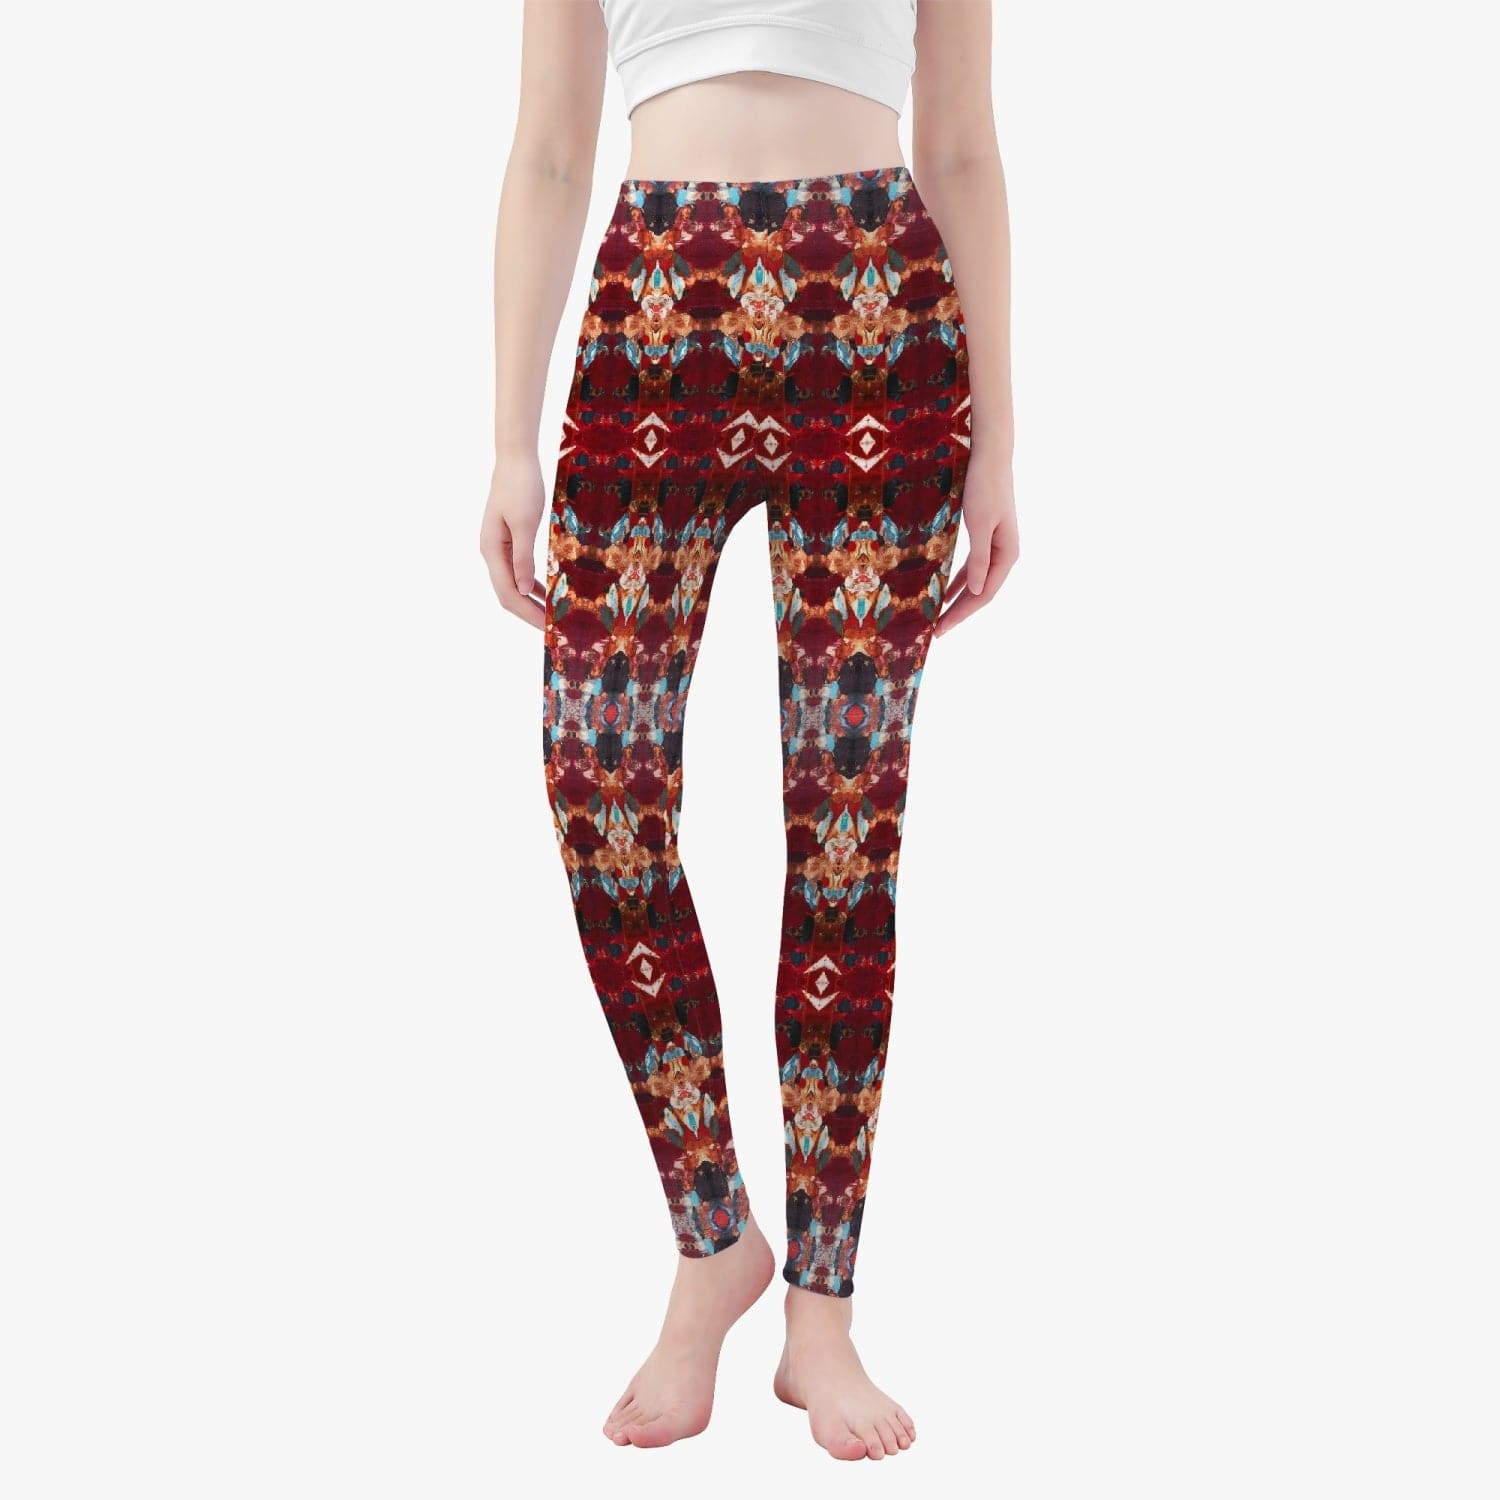 Gratitude Meditative Inspirations Yoga Pants/ Leggings for Women, by Sensus Studio Design